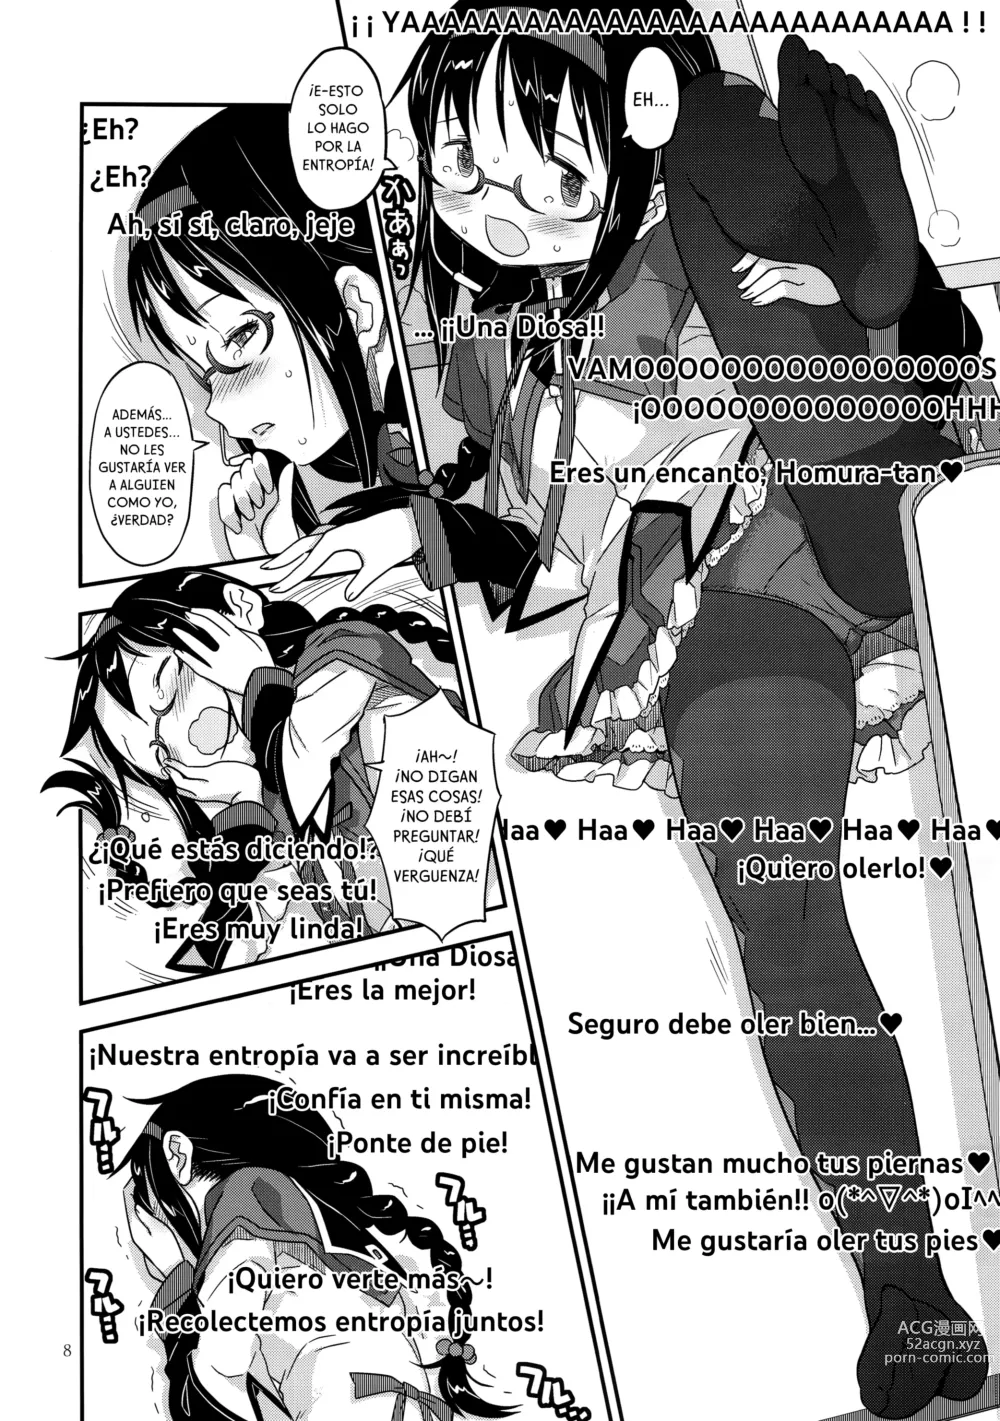 Page 7 of doujinshi GIRLIE:EX02